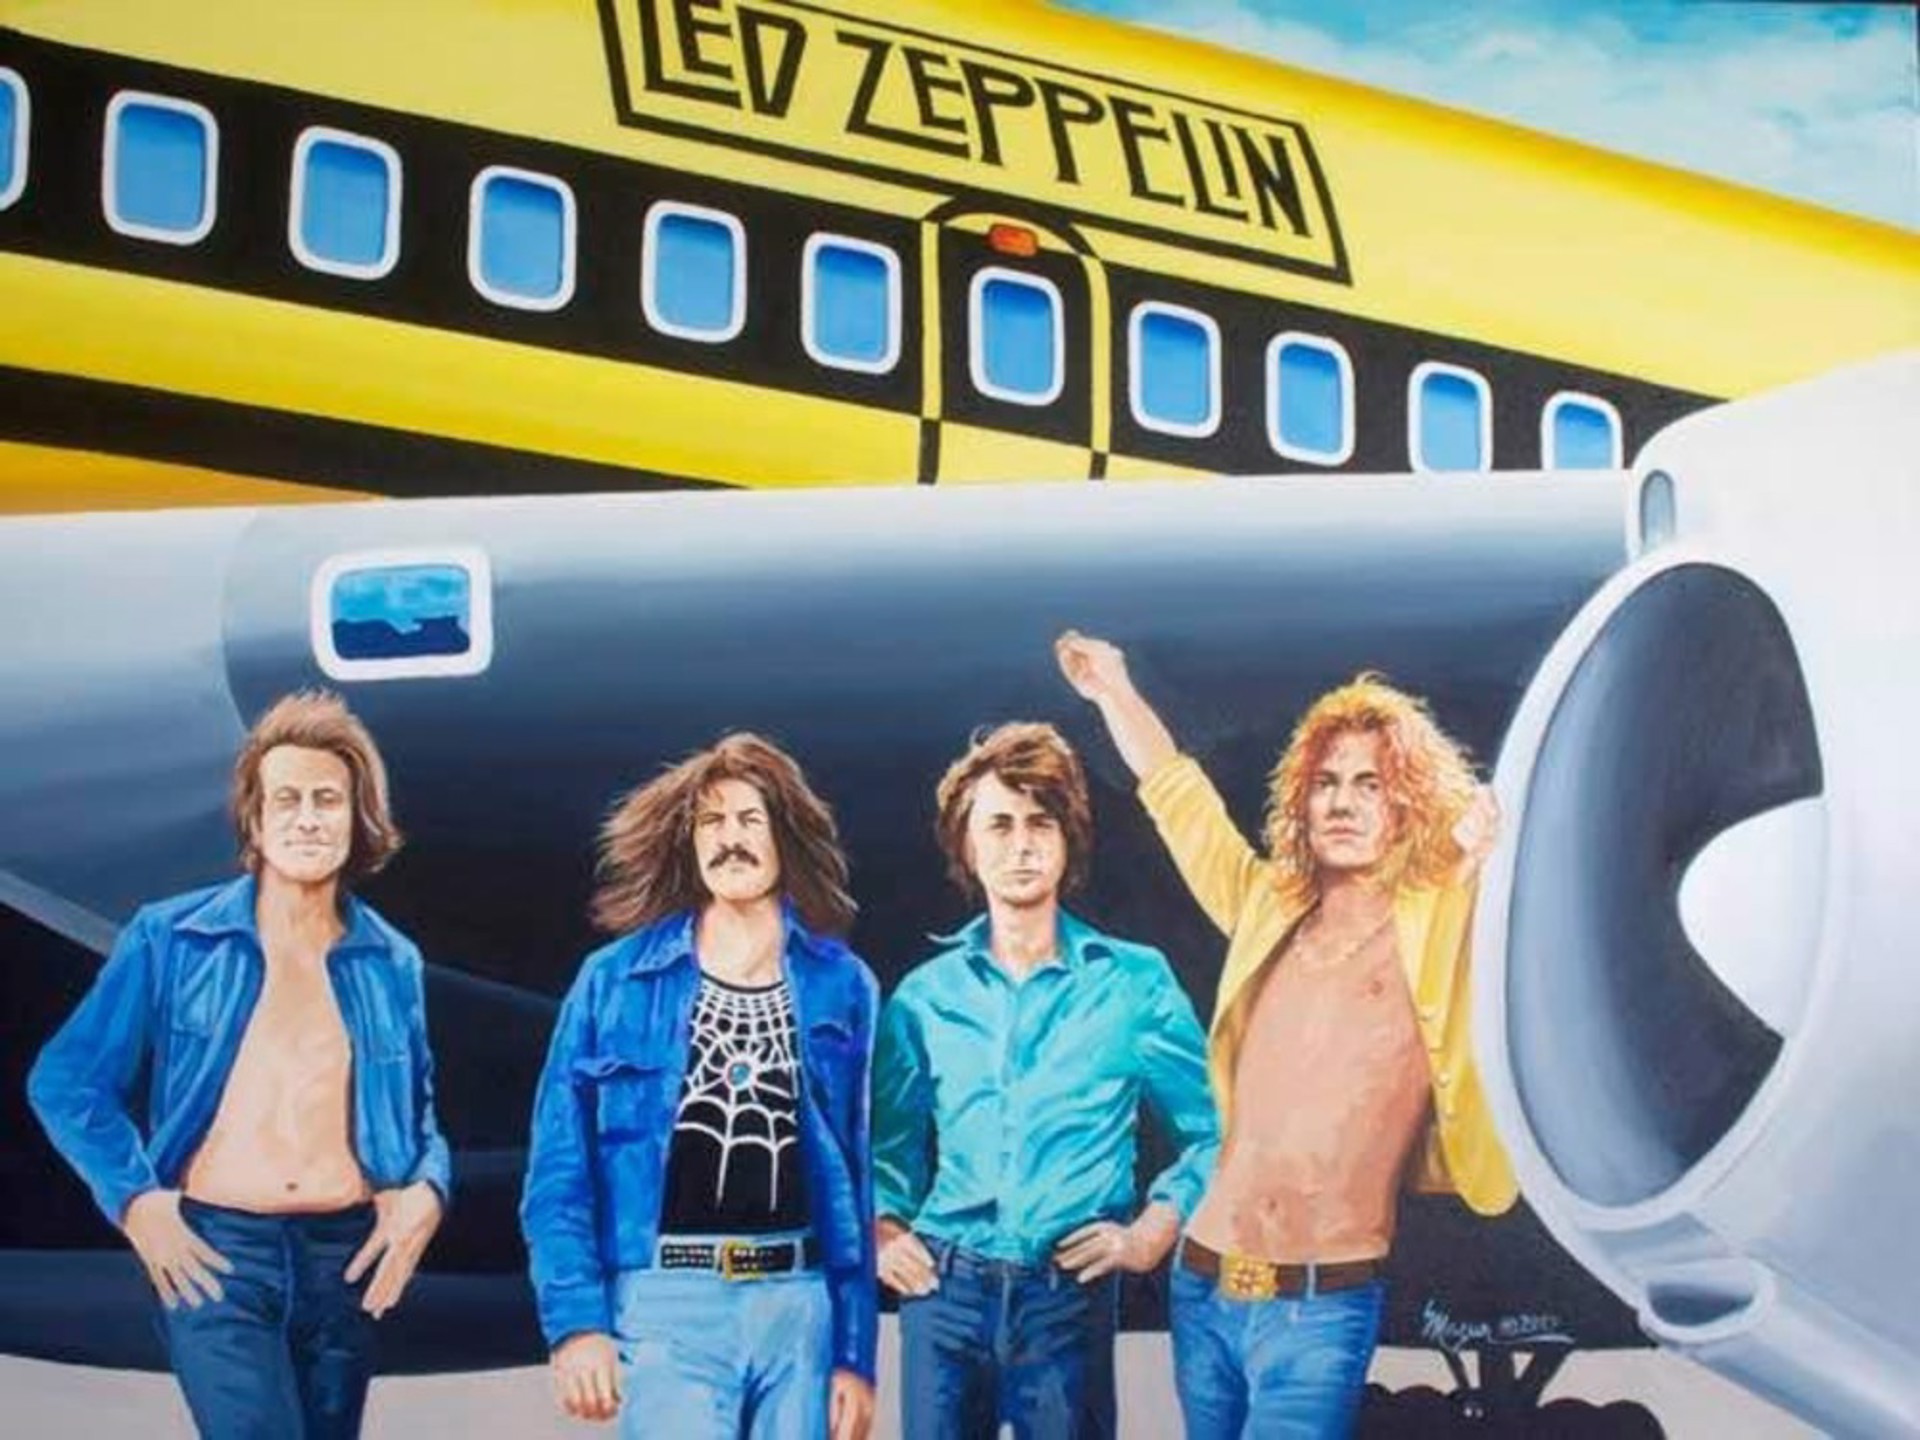 Led Zeppelin "Stairway to Heaven" by Ruby Mazur